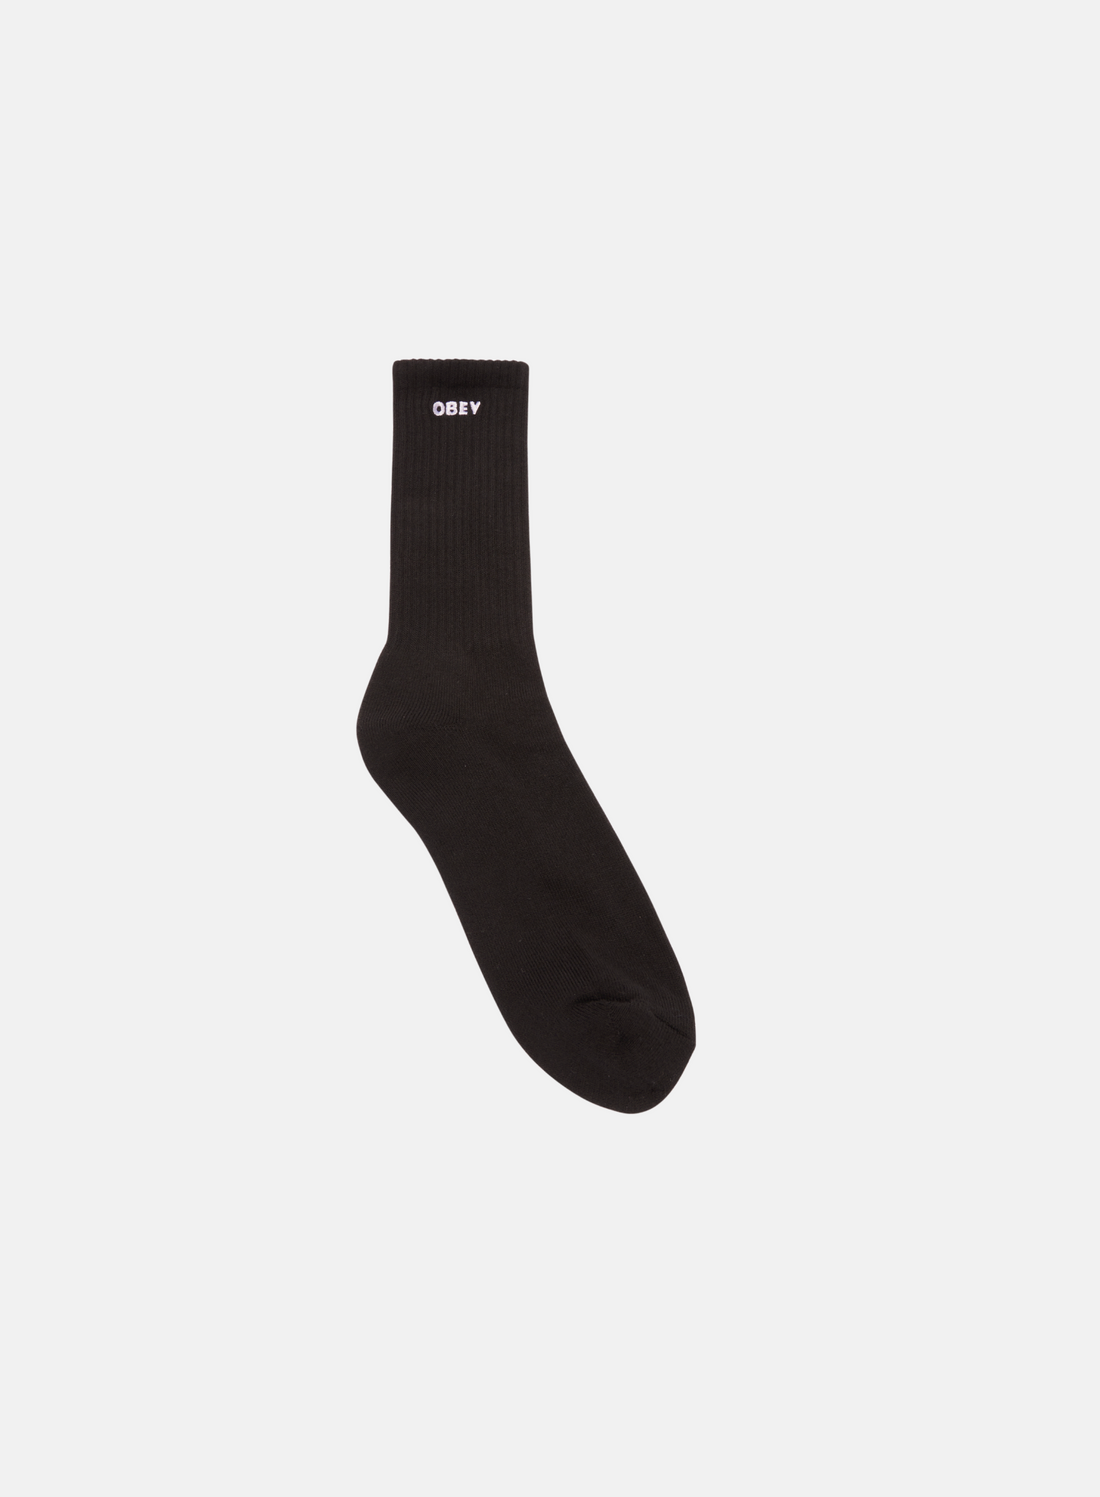 OBEY Bold Socks Black - Hympala Store 